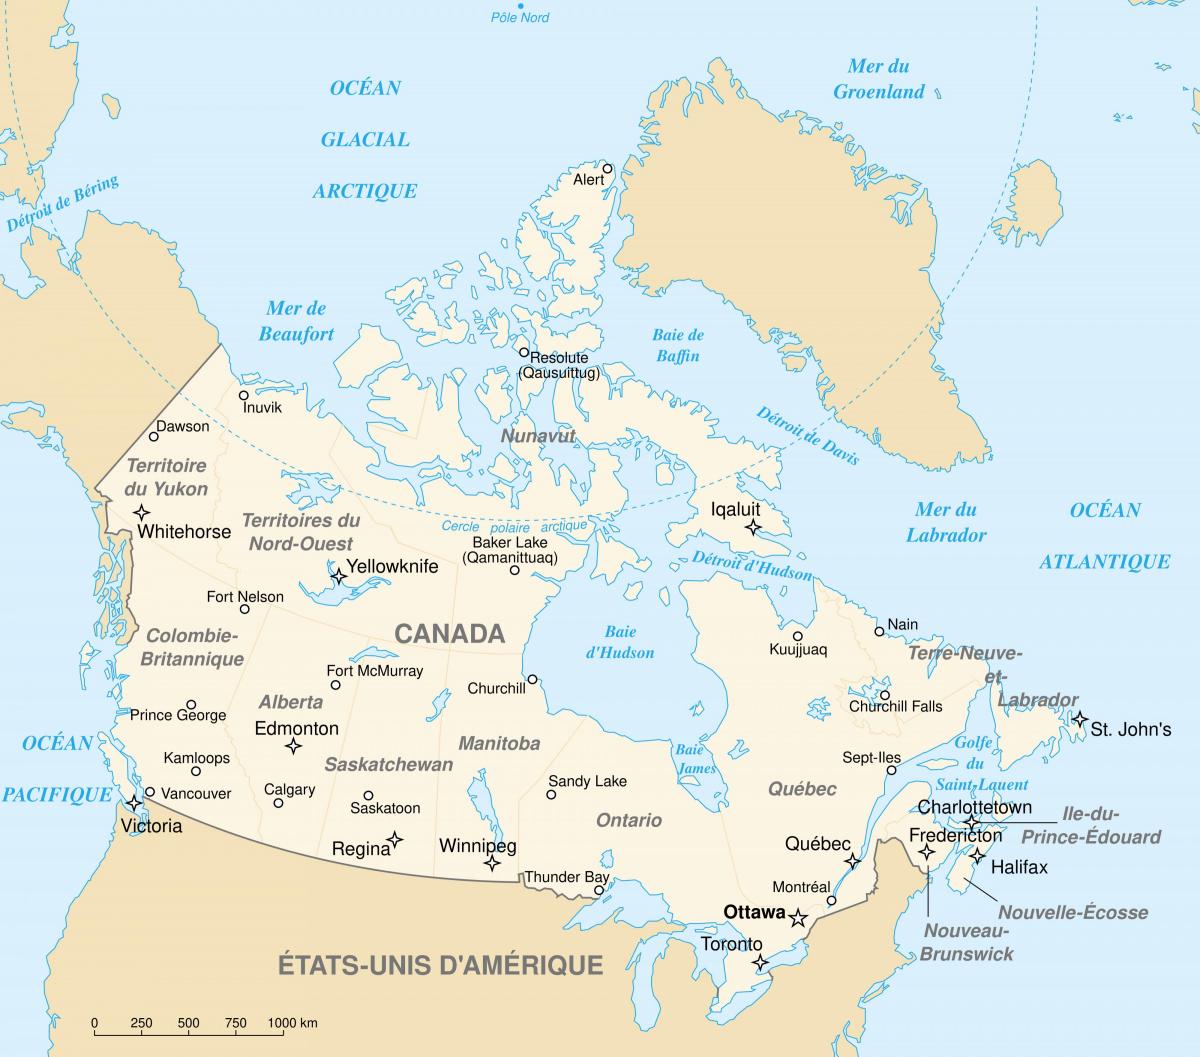 Mapa da cidade do Canadá